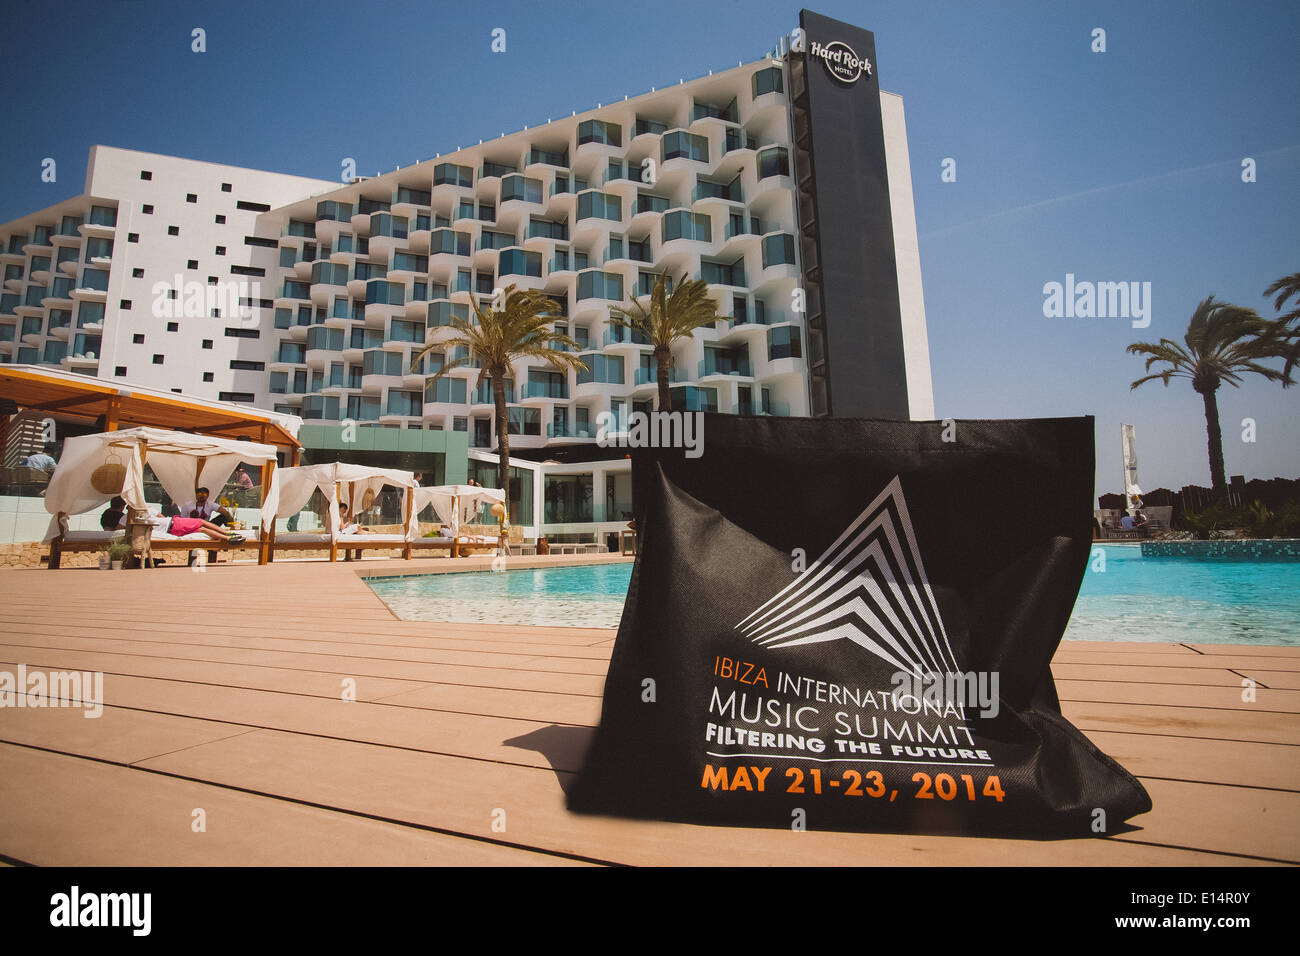 Ibiza International music summit 2014 Stock Photo